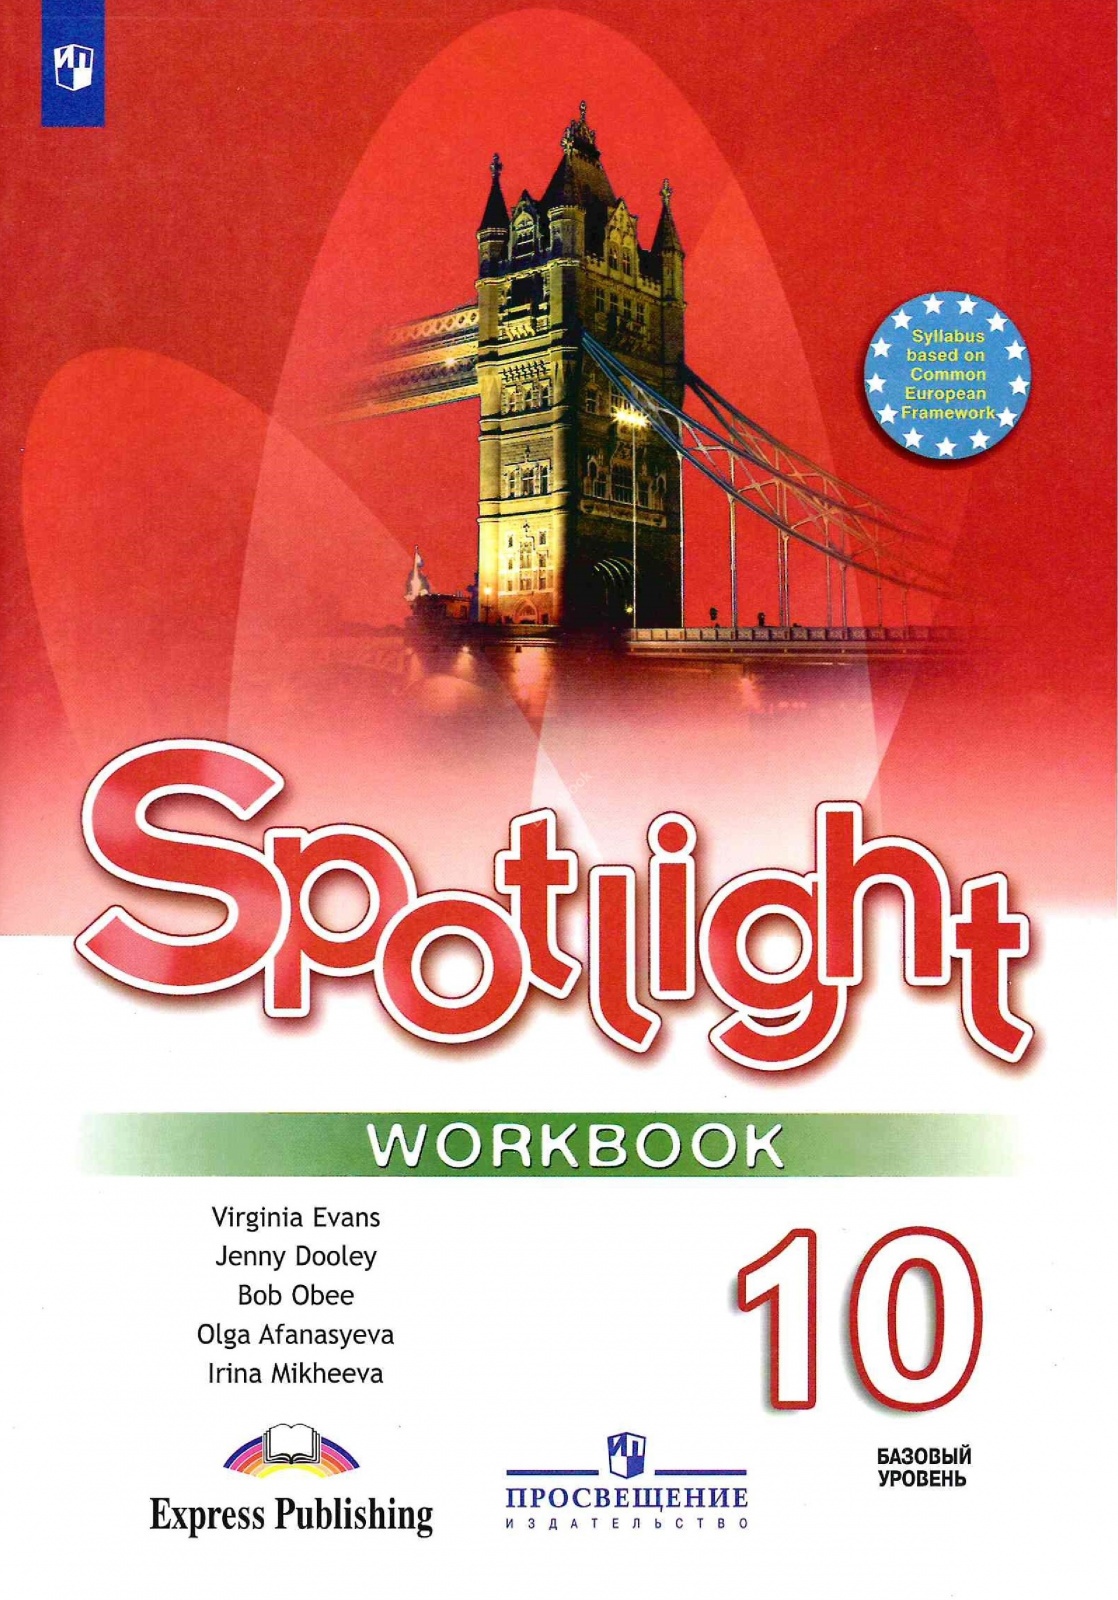 Английский 10 класс spotlight афанасьева дули. Workbook Spotlight 5 класс ваулина. Spotlight 5 Workbook английский язык Эванс. Англ 5 класс рабочая тетрадь Spotlight. Тетради для английского языка 5 класс спотлайт.